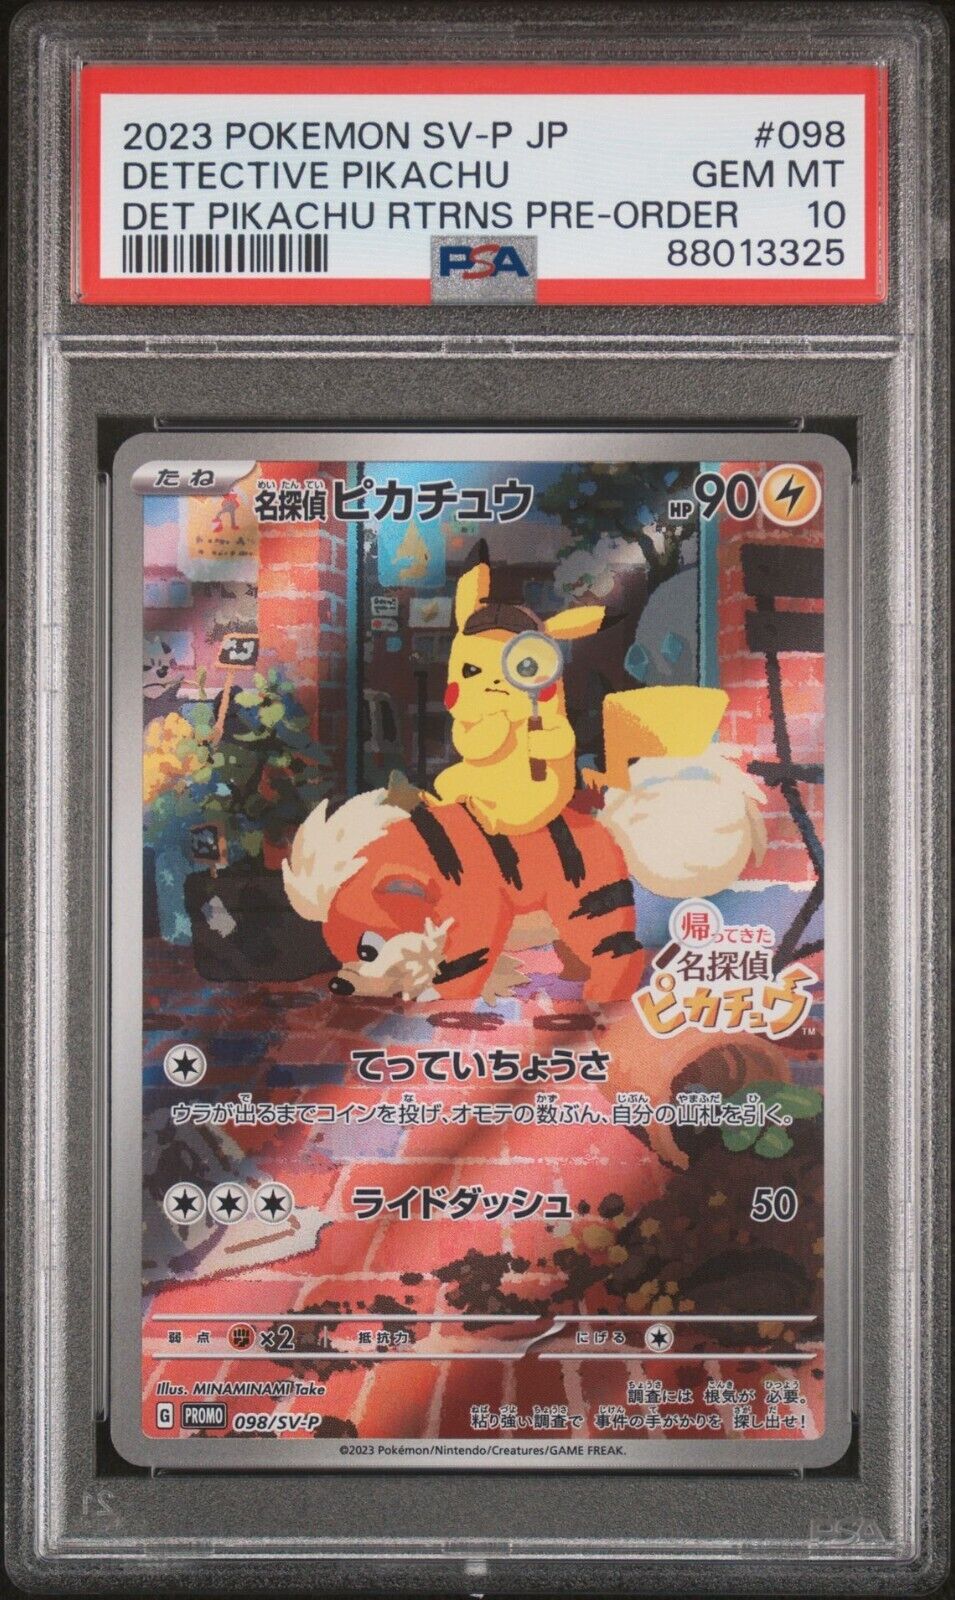 PSA 10 GEM MINT Detective Pikachu #098 SV-P Japanese Pokemon Card PROMO